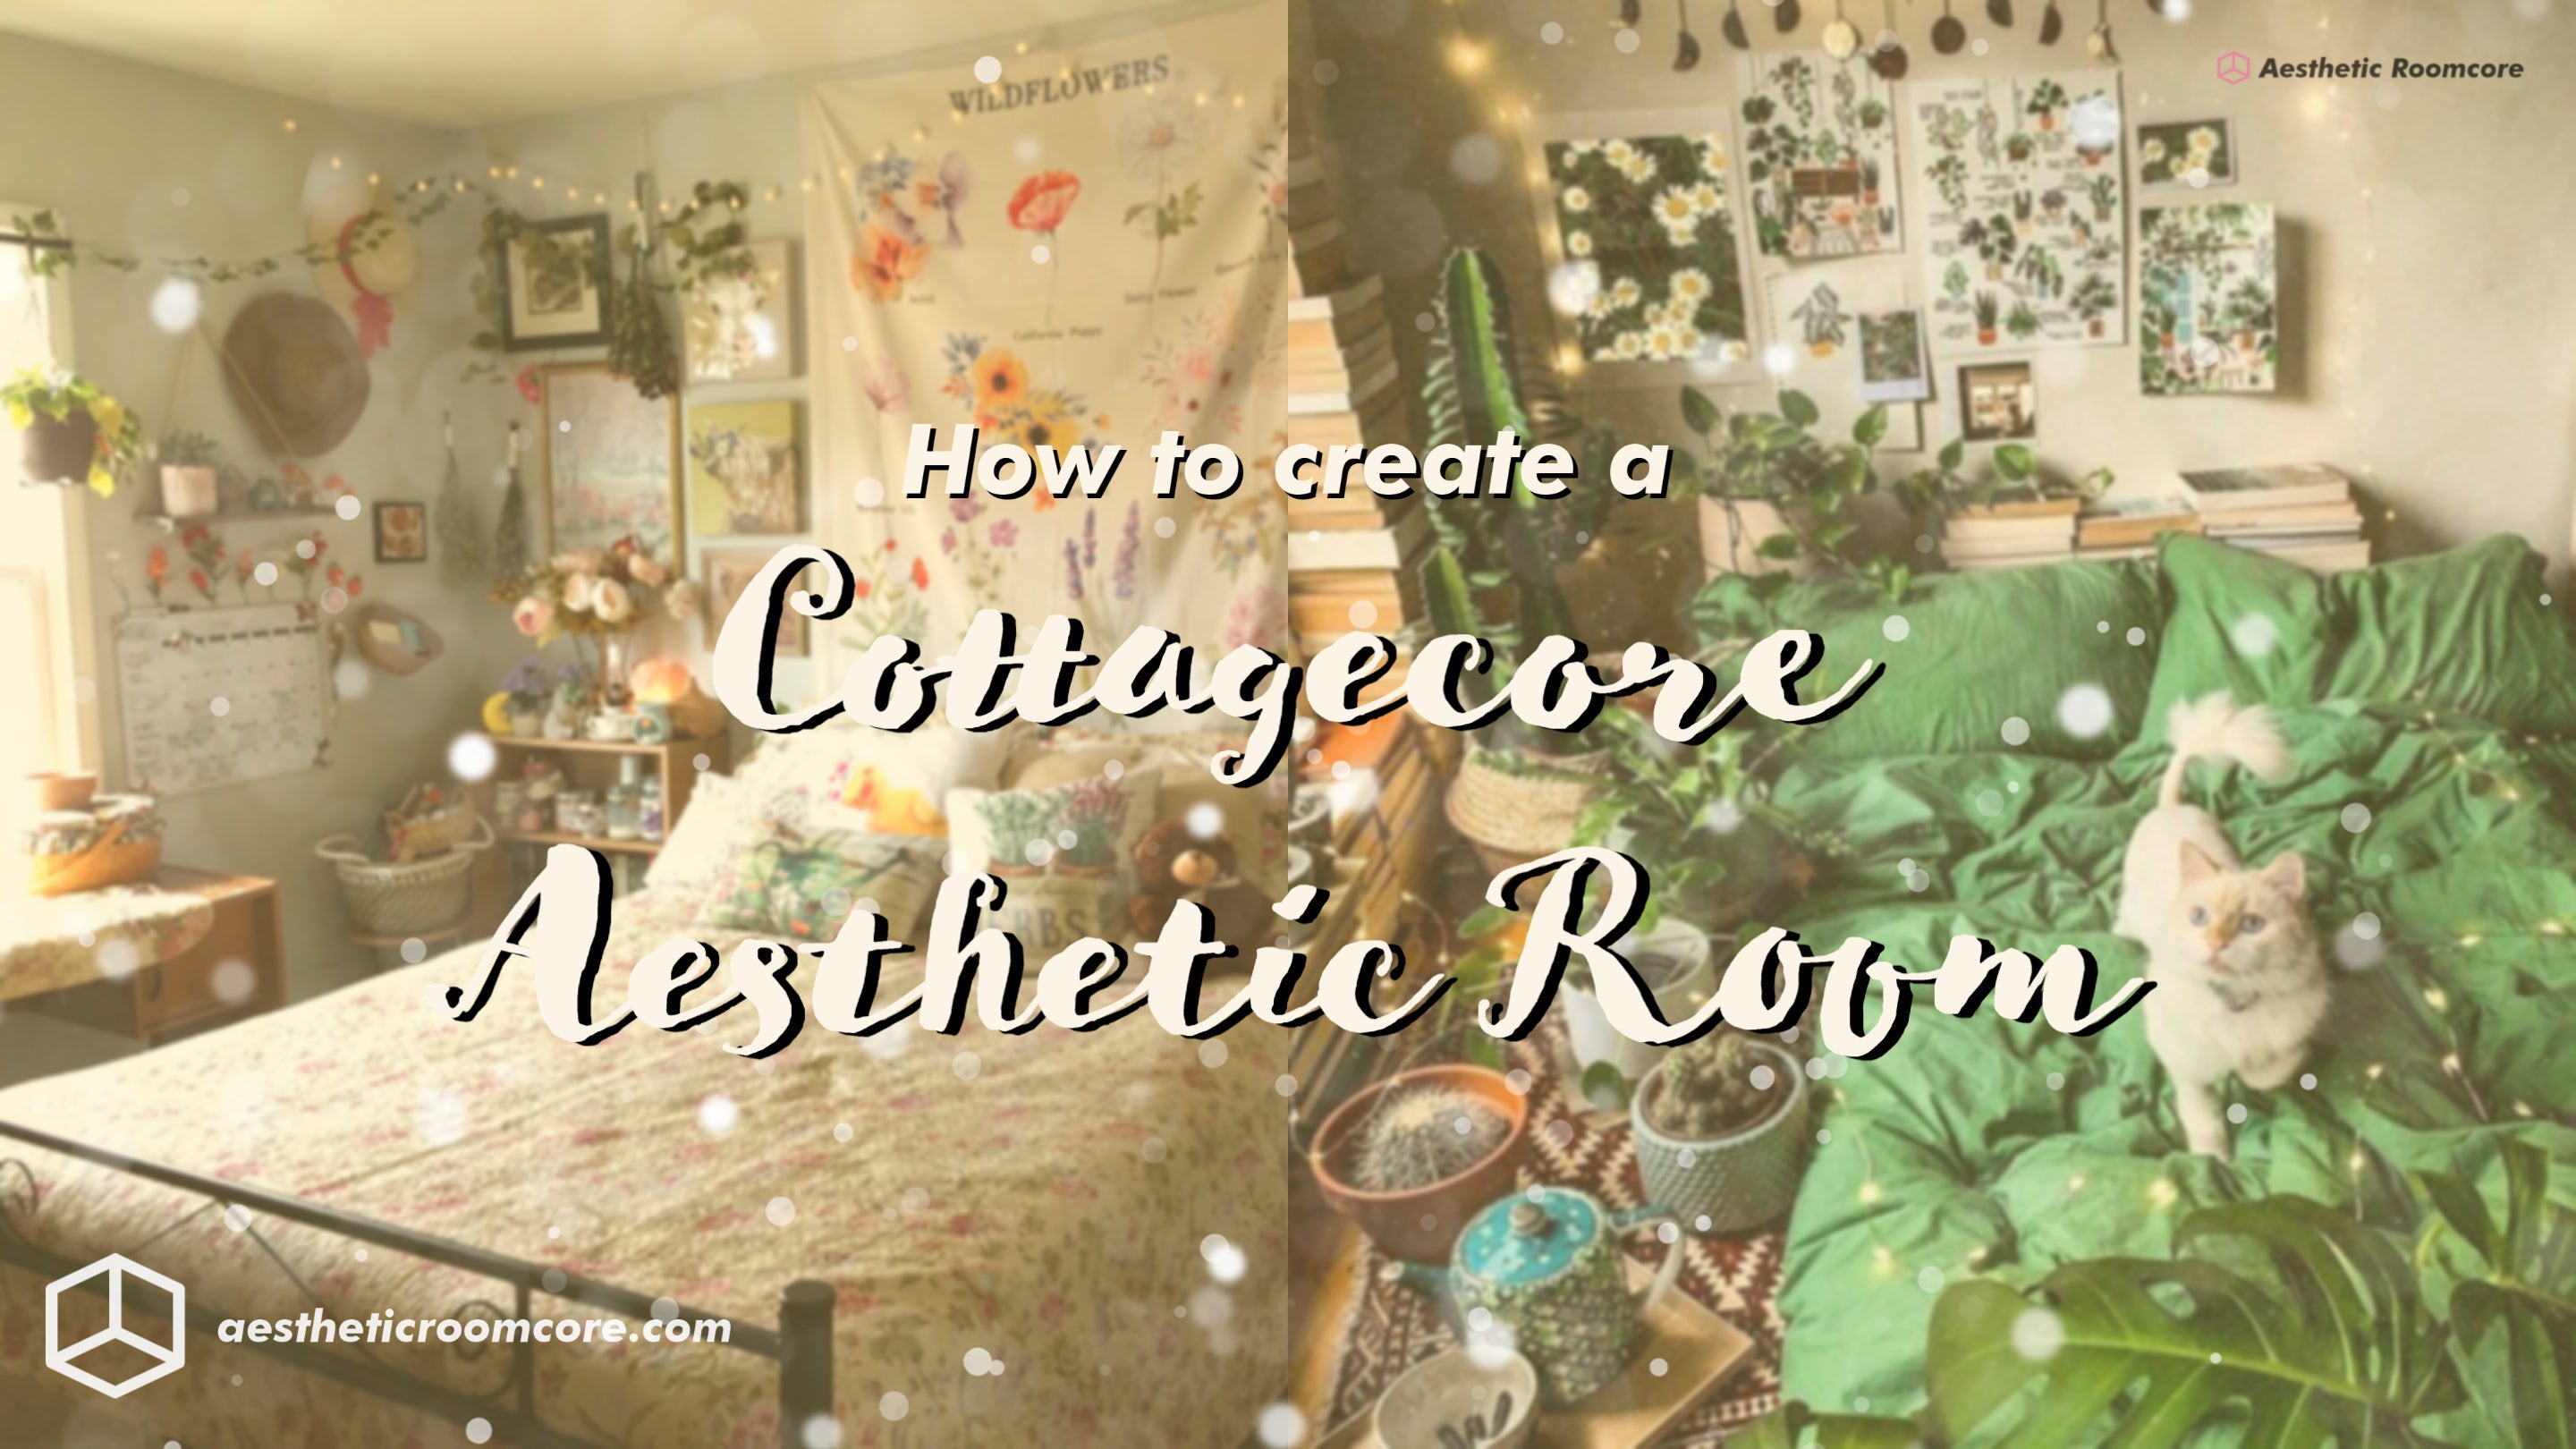 Coquette room  Room makeover inspiration, Room inspo, Room makeover bedroom